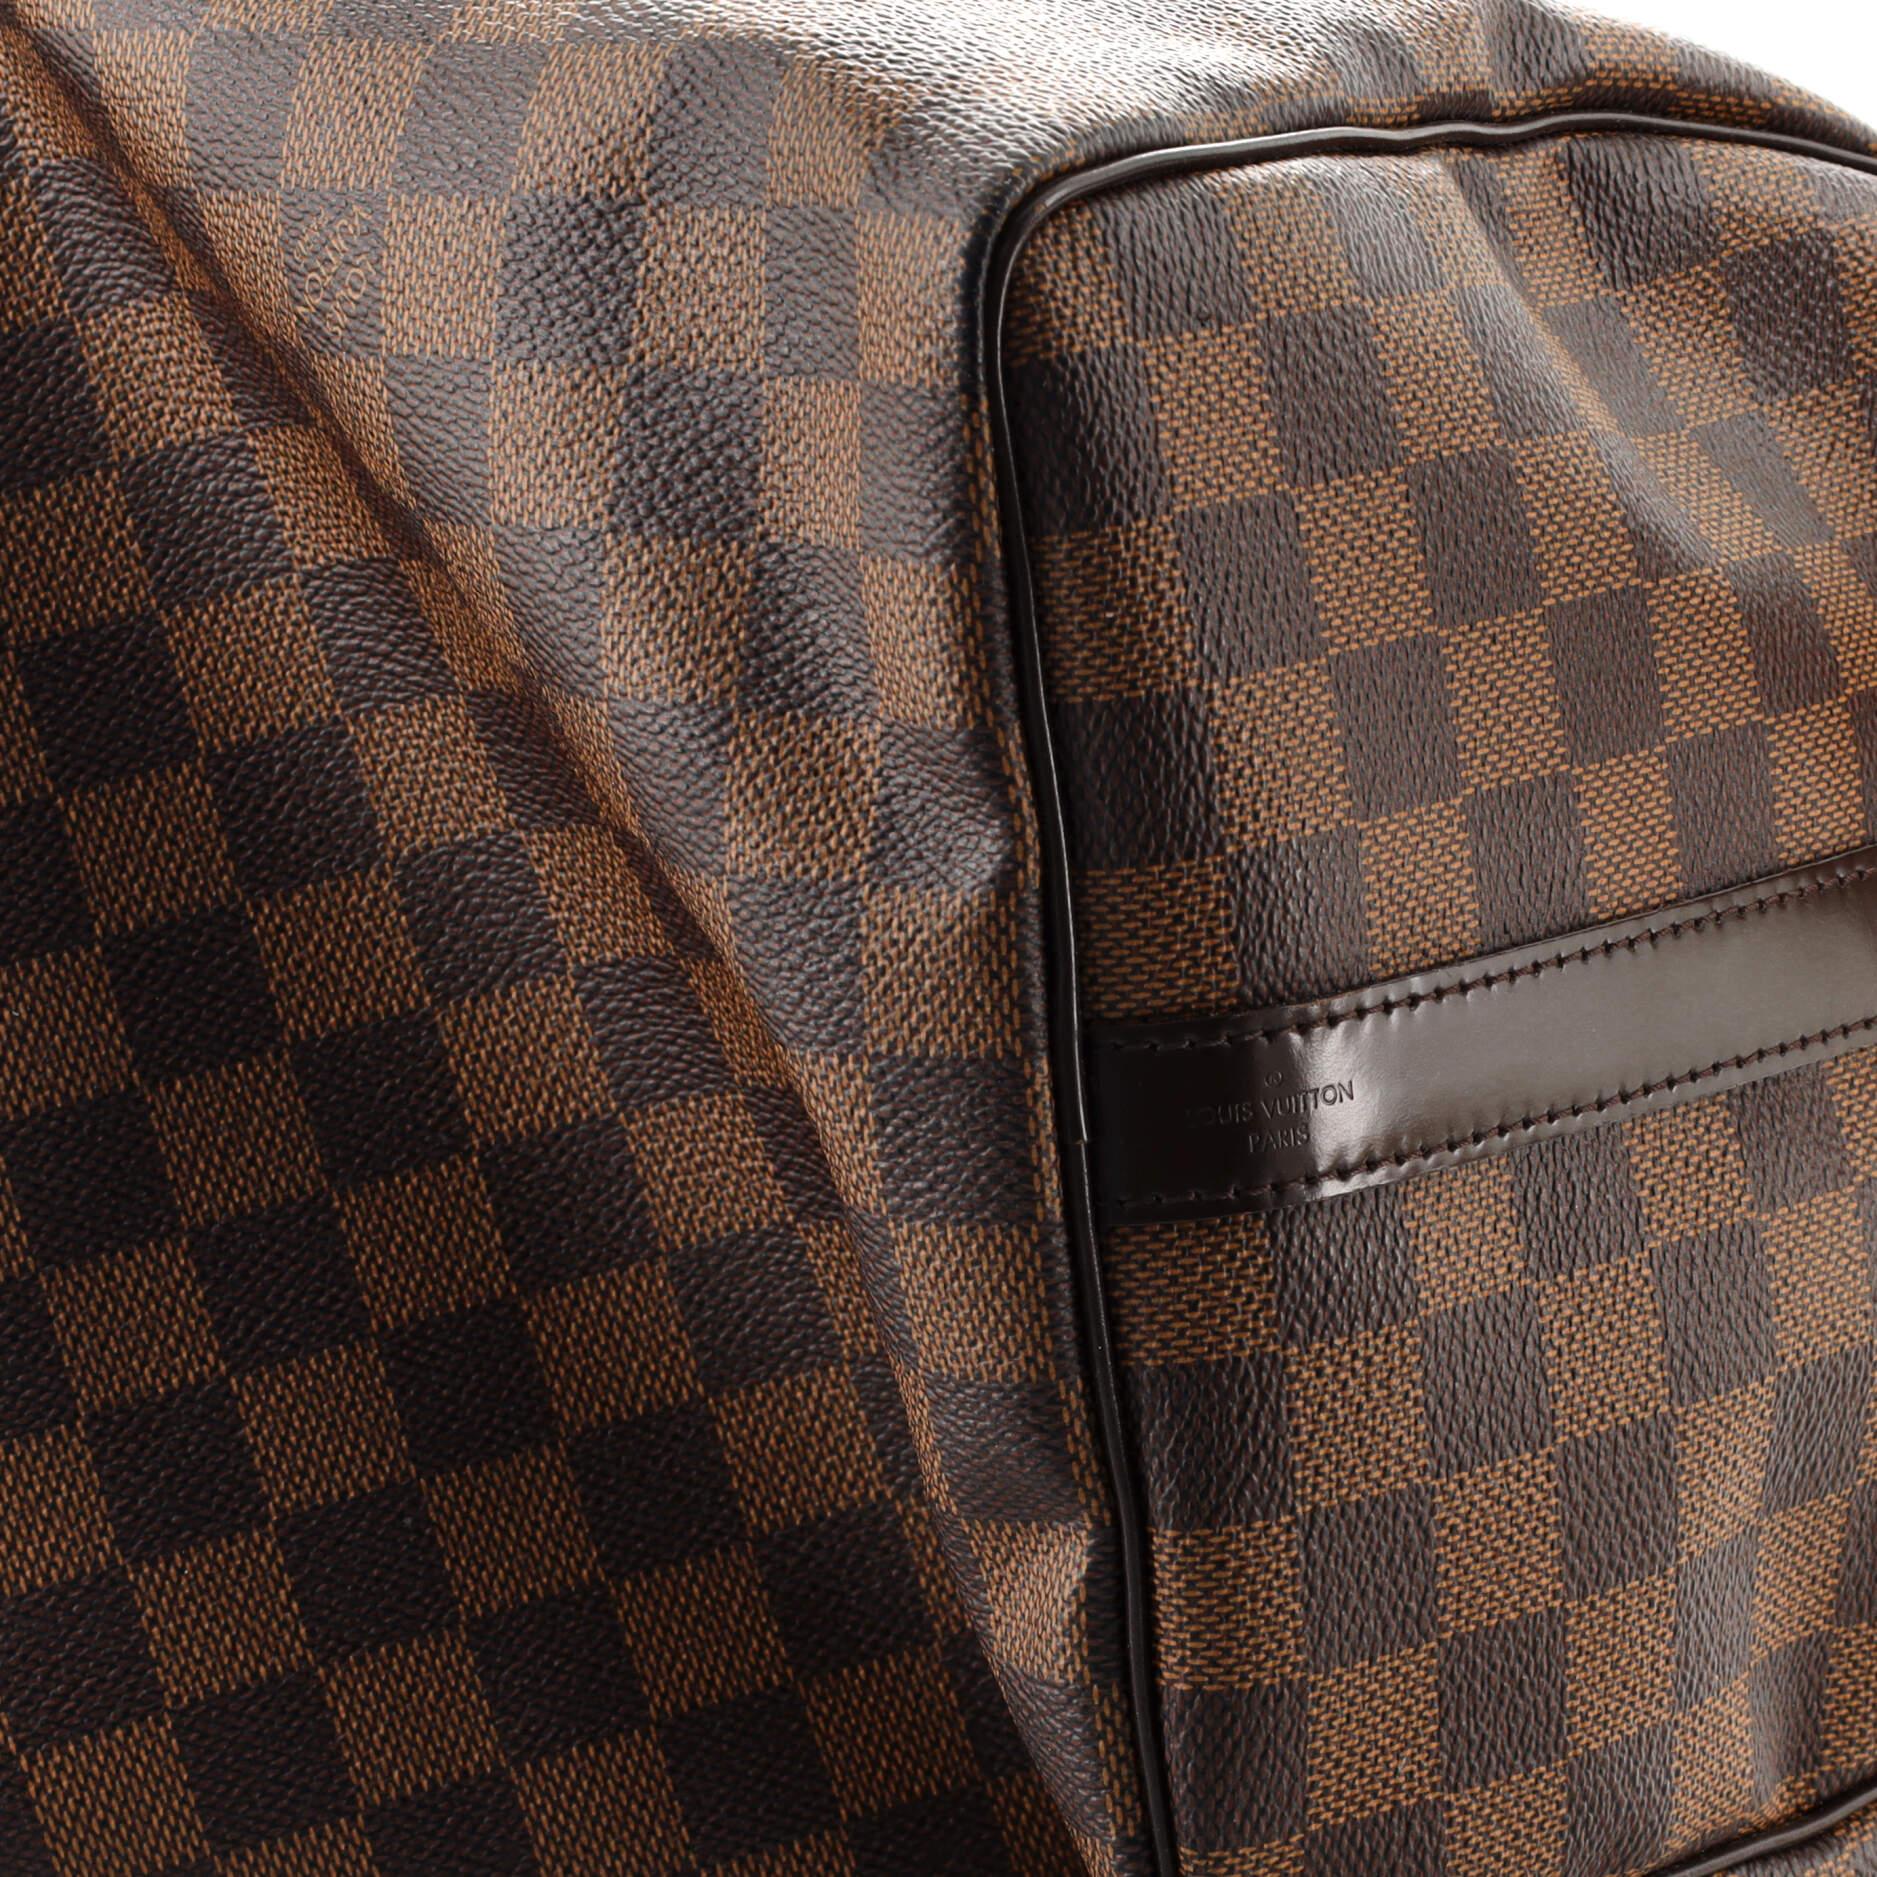  Louis Vuitton Speedy Bandouliere Bag Damier 35 1